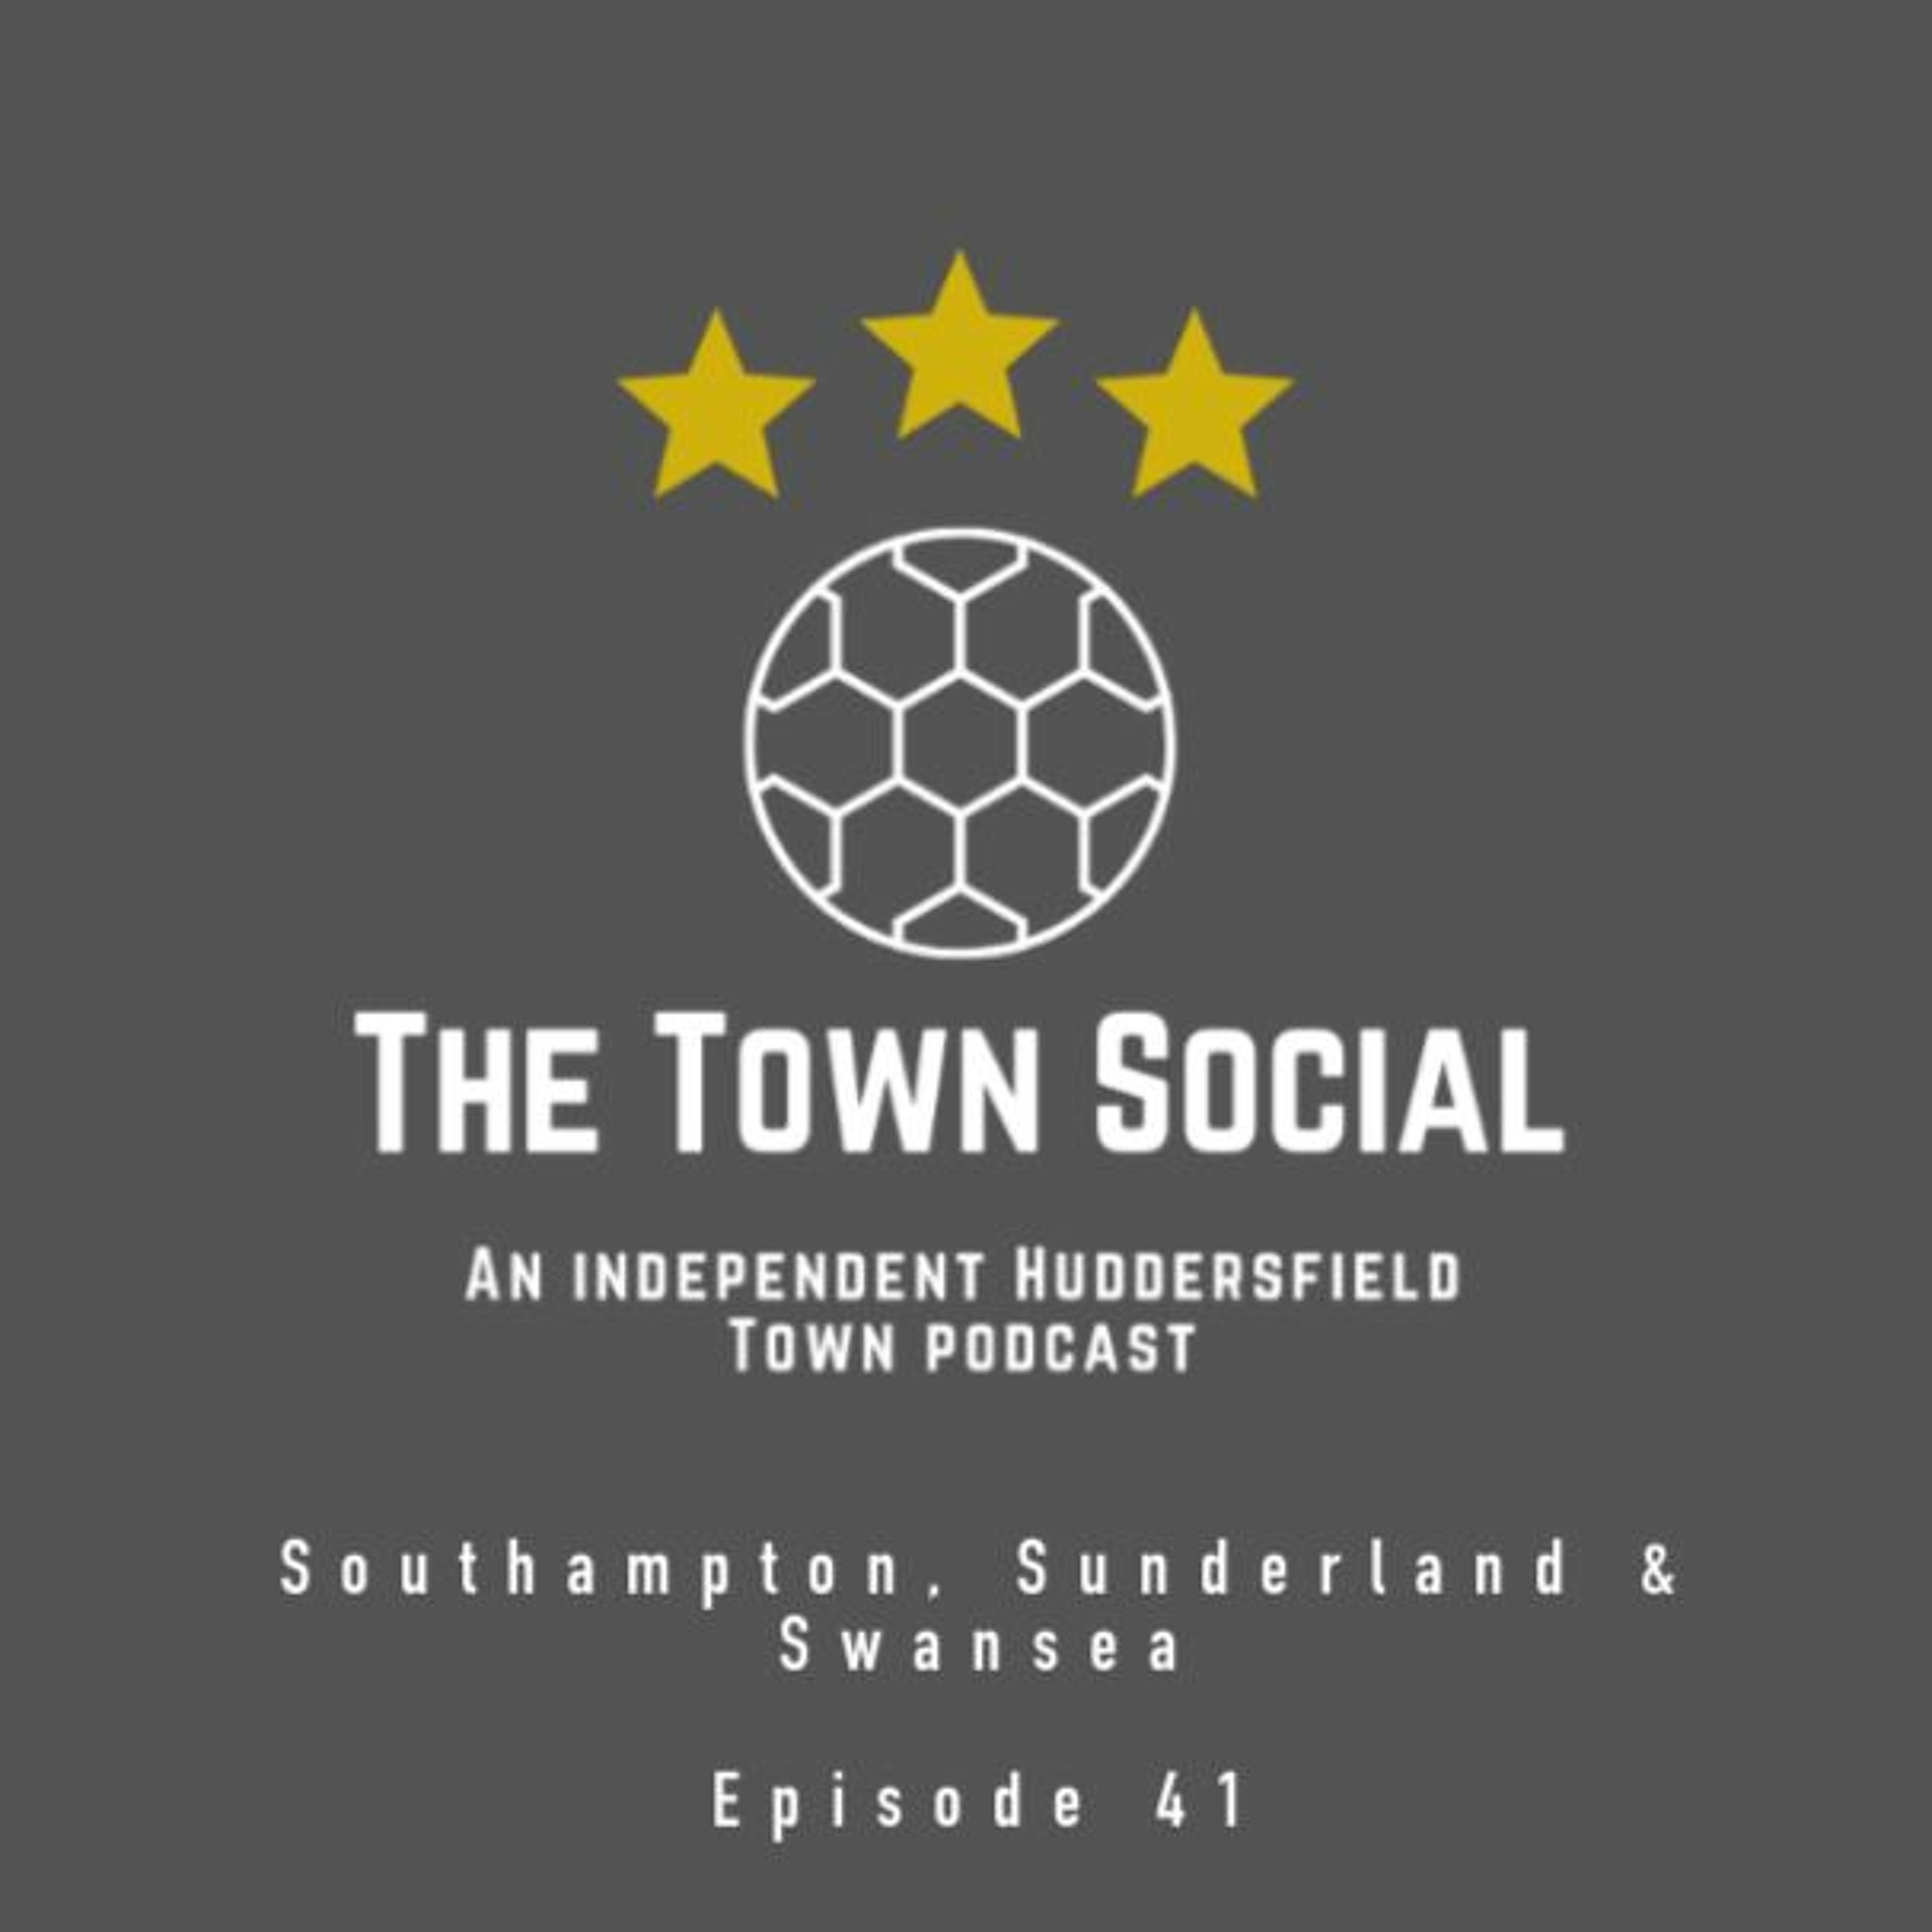 Southampton, Sunderland & Swansea - Episode 41